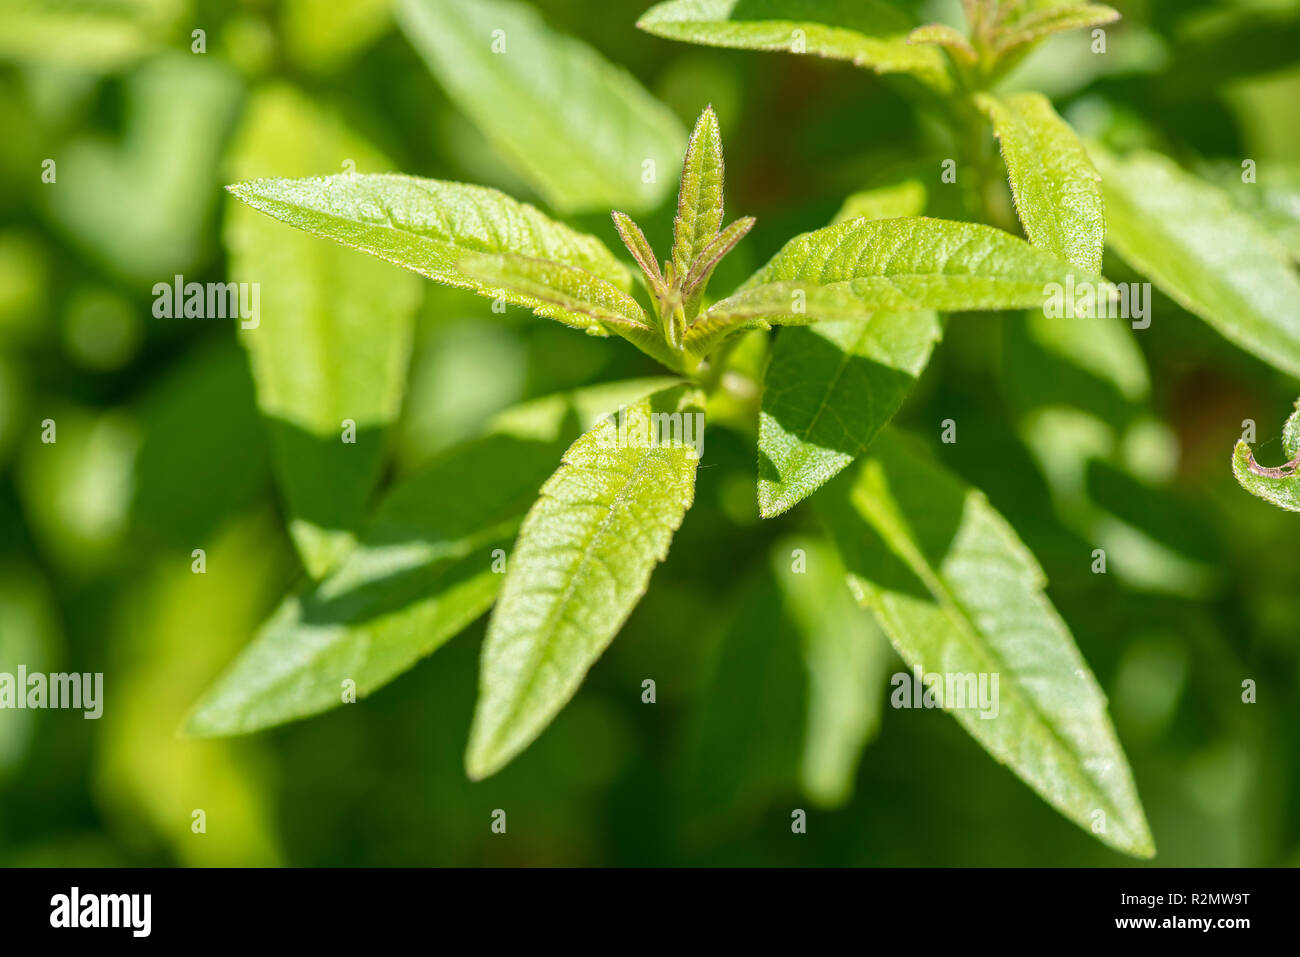 Lemon verbena as a medicinal plant for natural medicine and herbal medicine Stock Photo